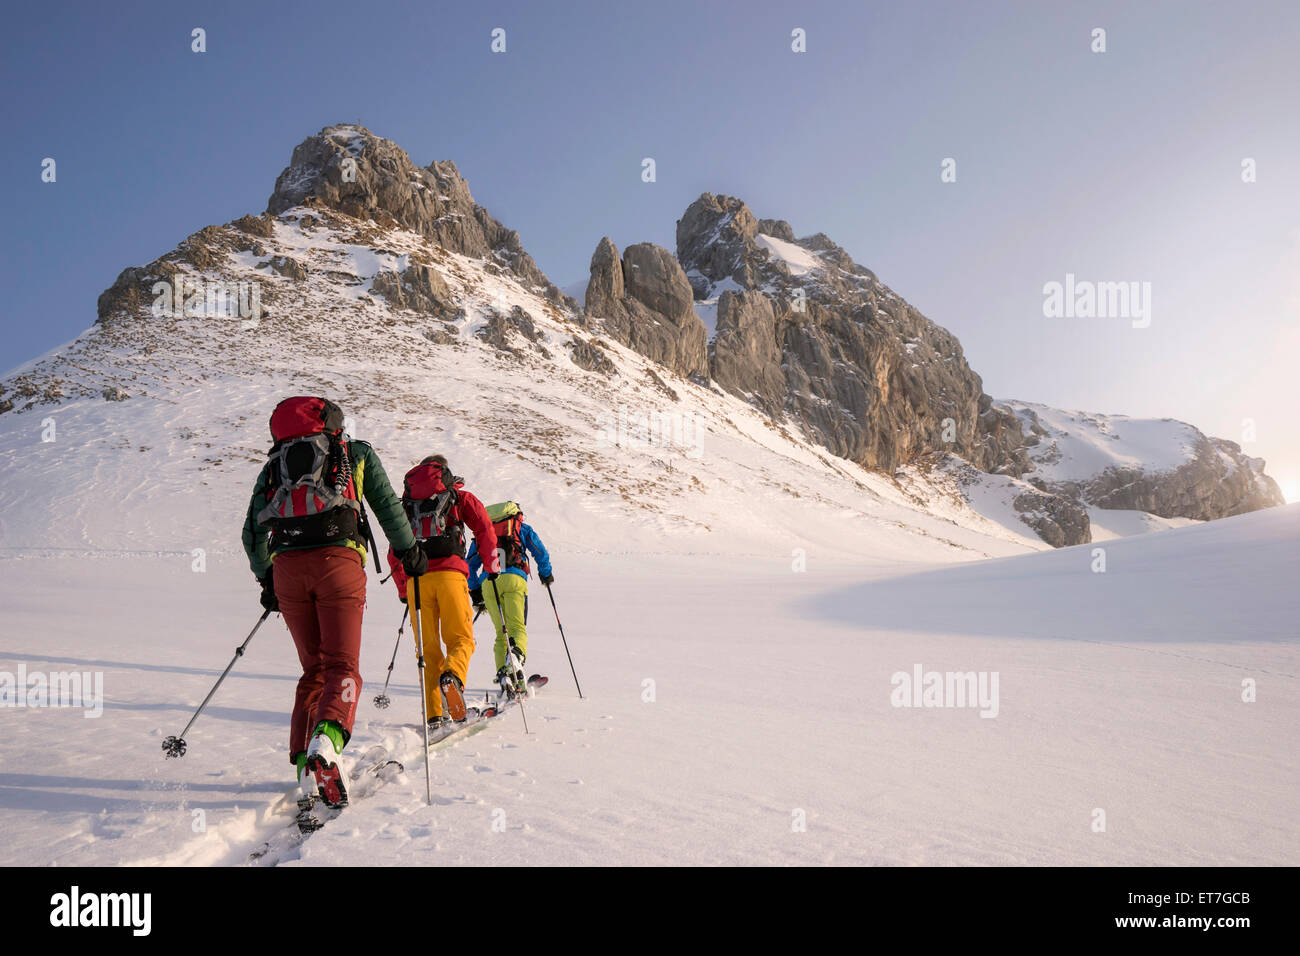 Ski mountaineers climbing on snowy peak, Tyrol, Austria Stock Photo